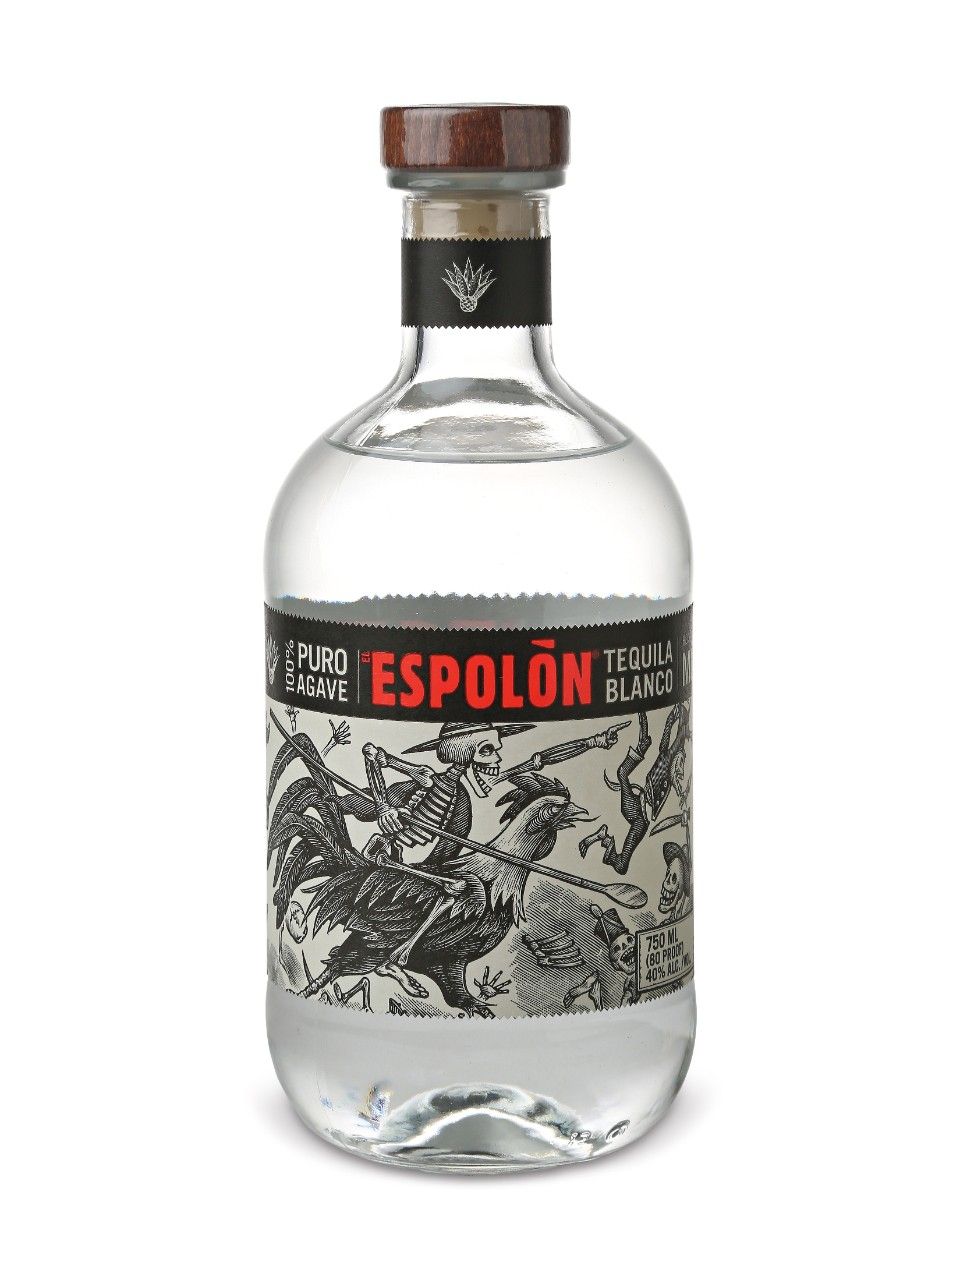 Espolon Tequila Blanco from LCBO